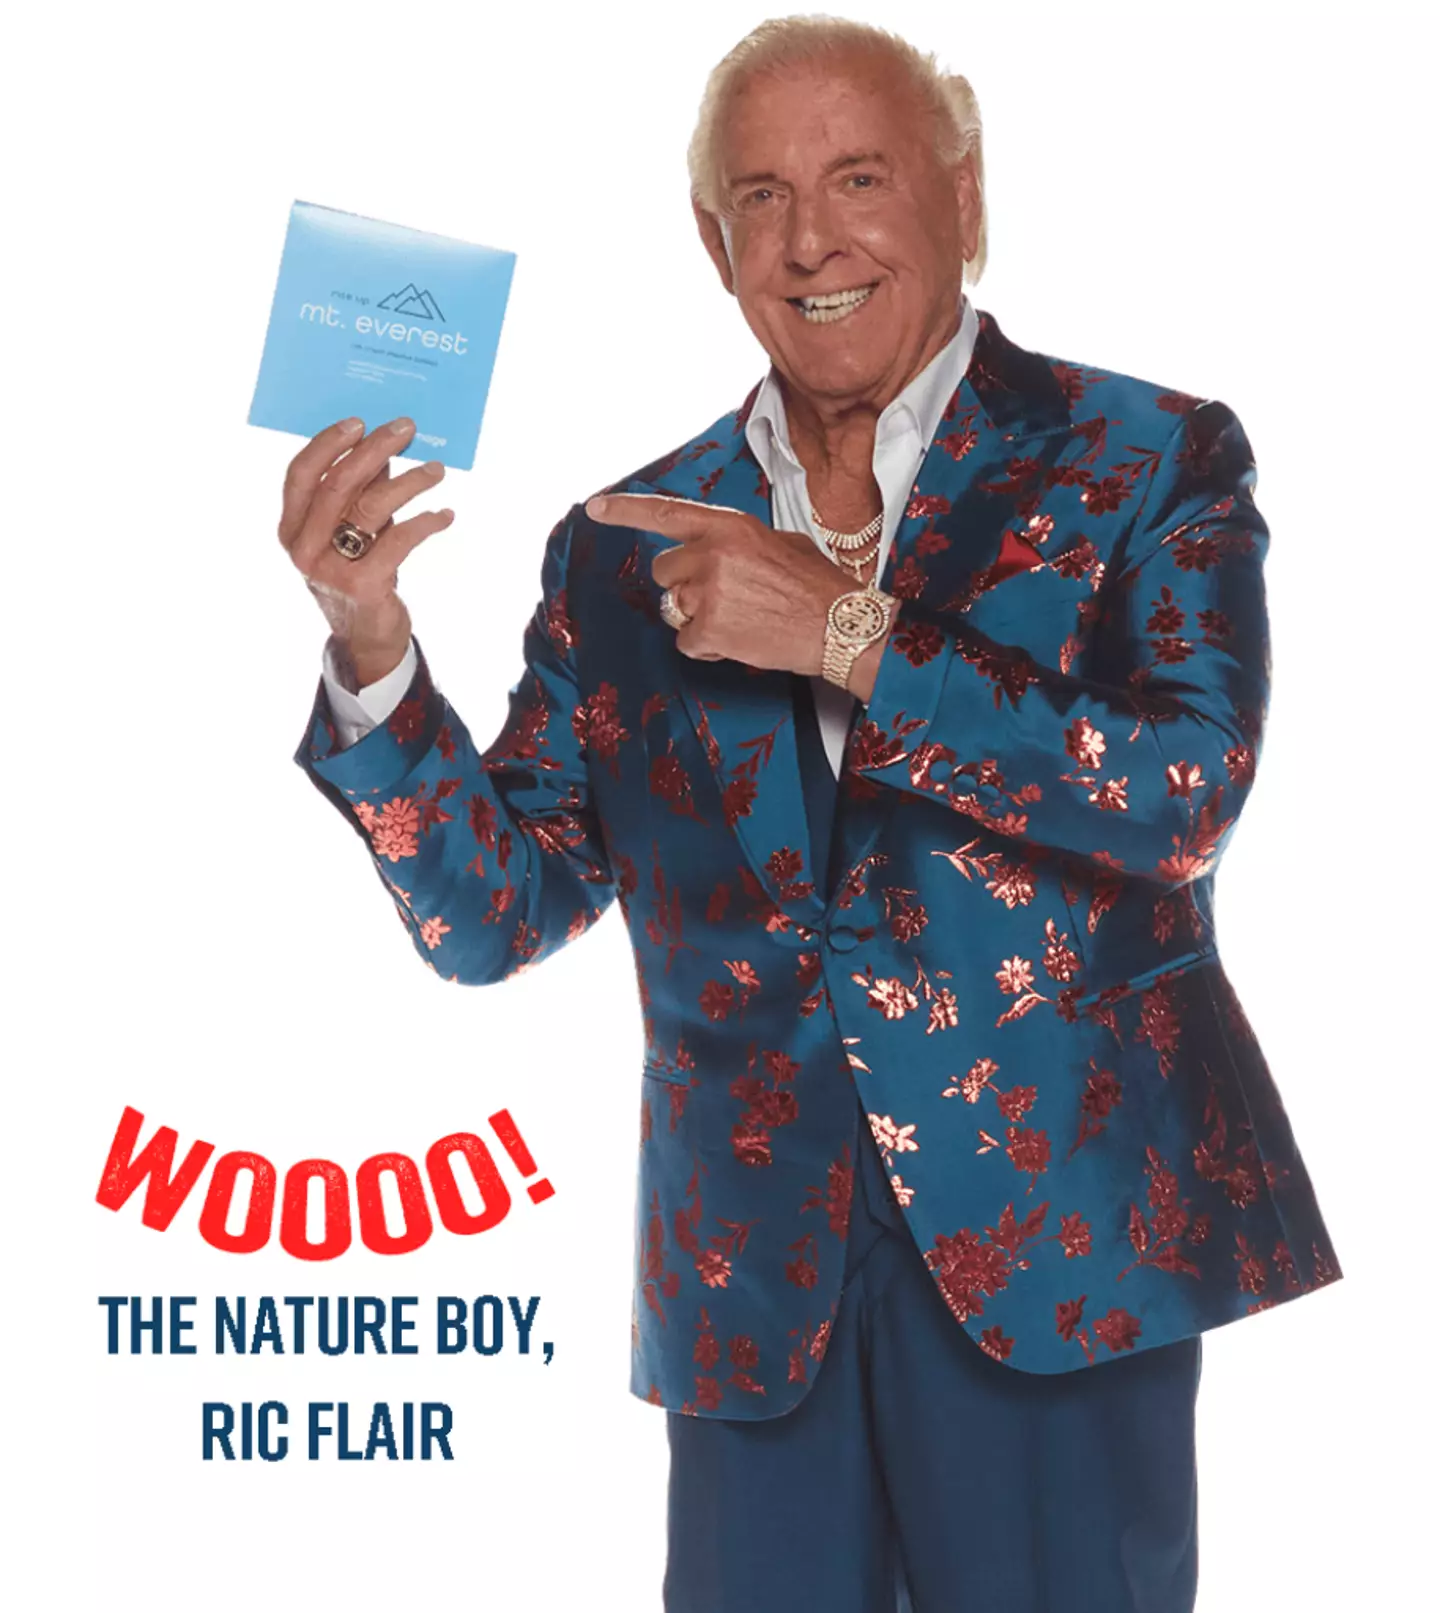 Flair is selling boner pills now.